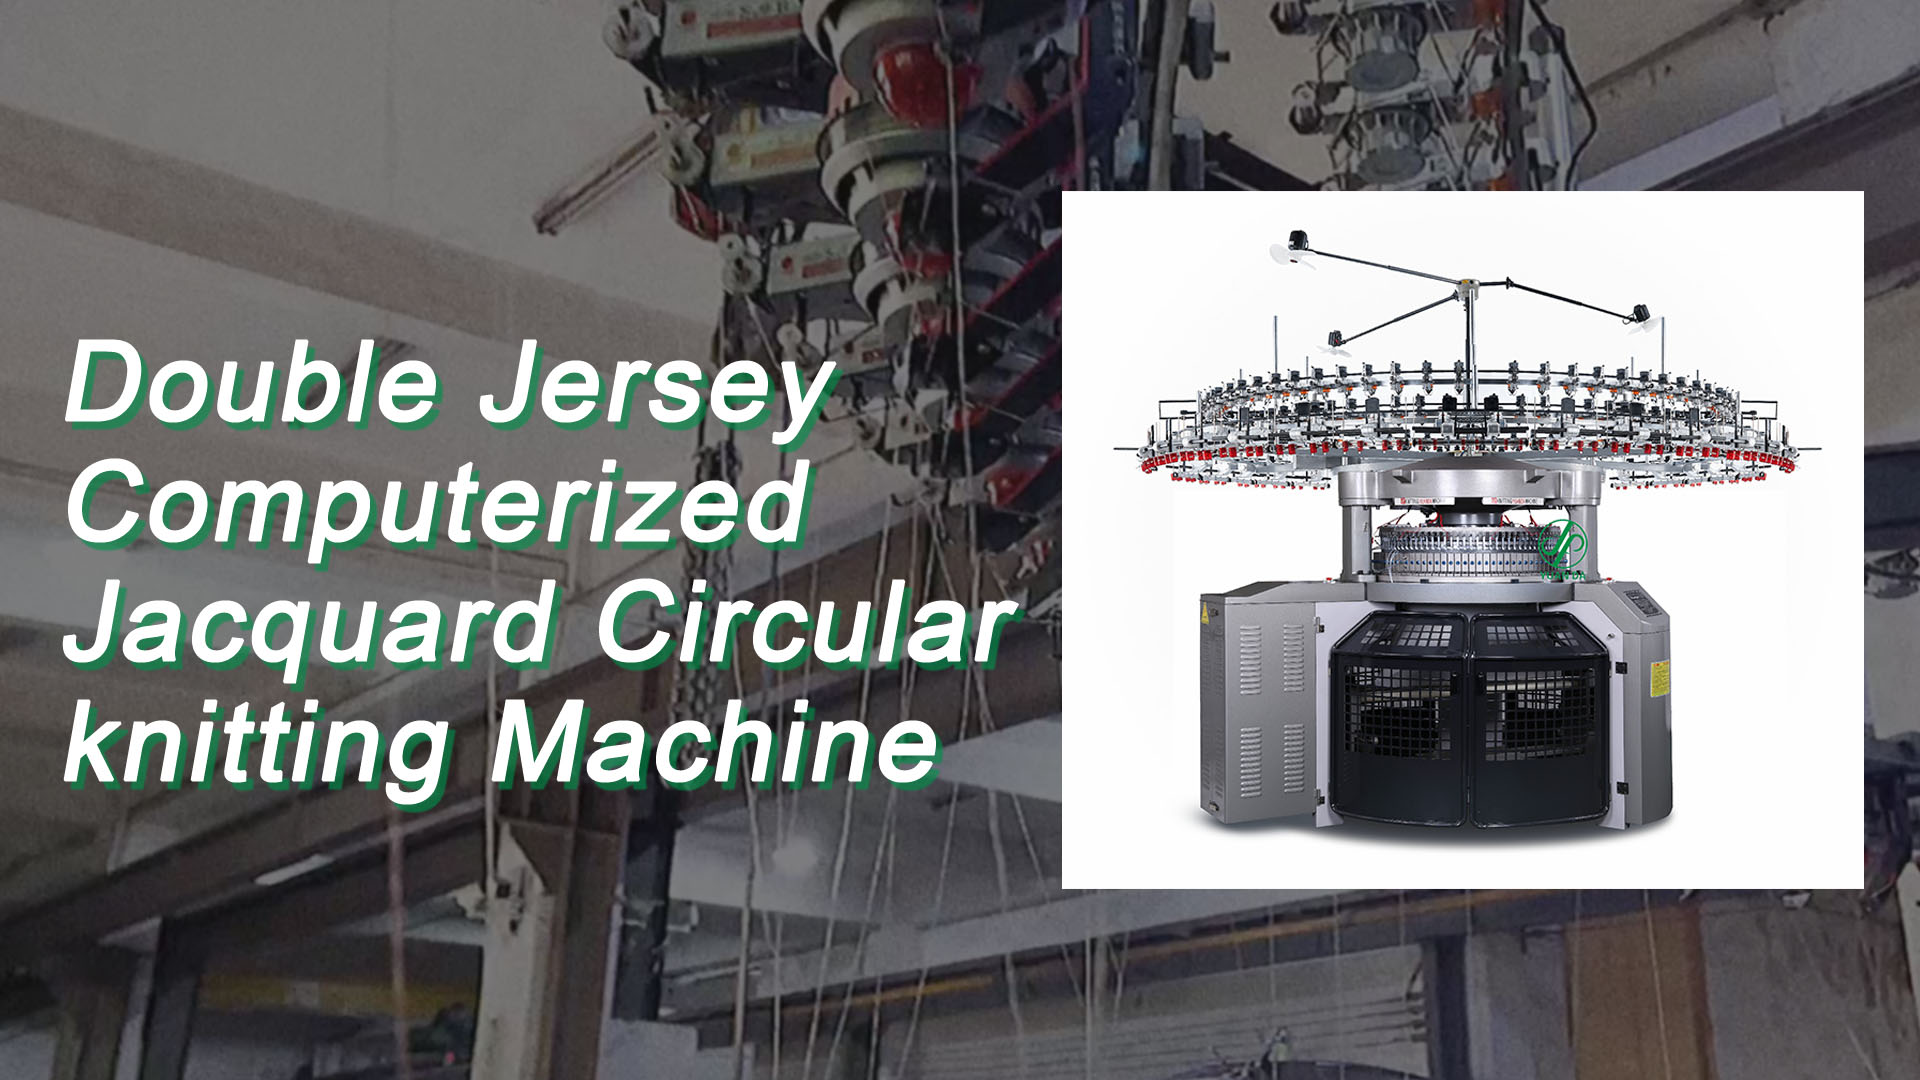 Double Jersey Computerized Jacquard Circular knitting Machine